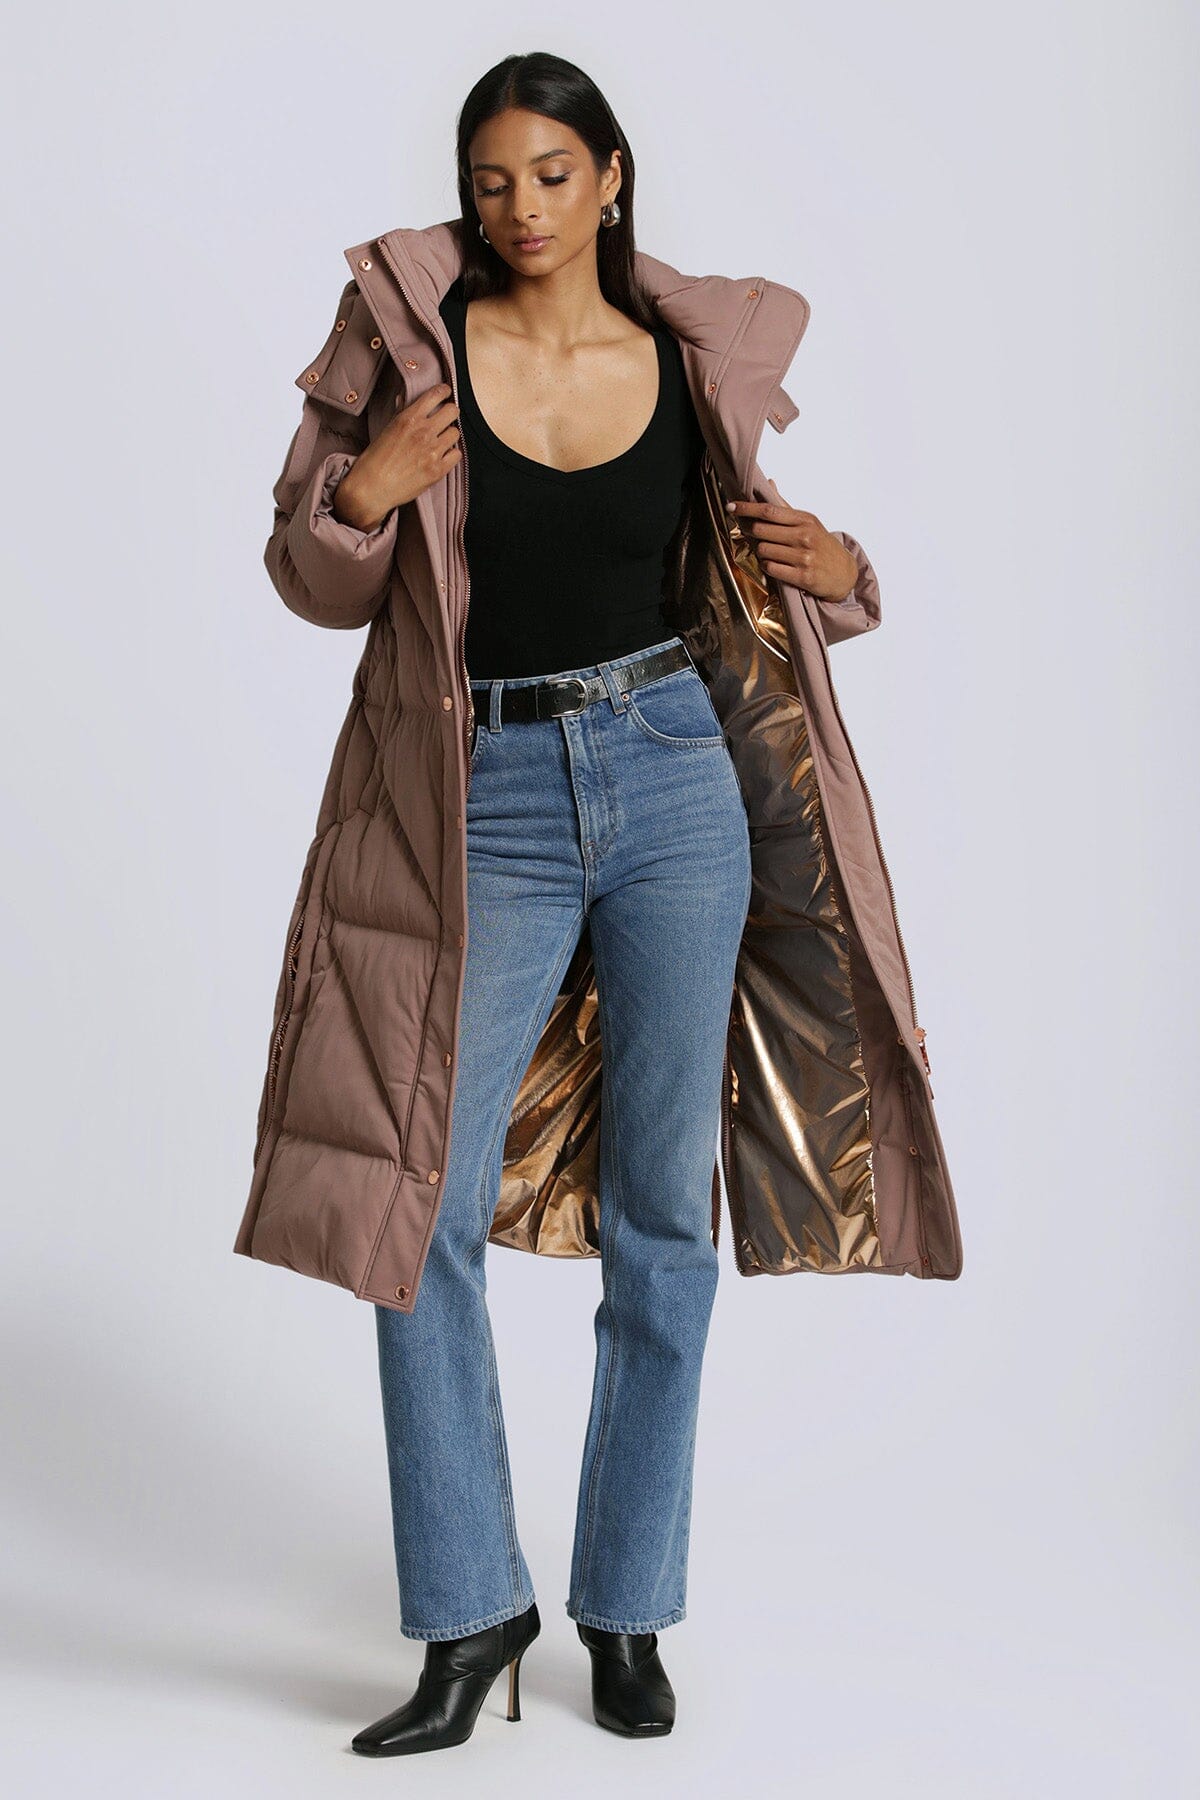 Umber brown thermal puff longline cloud duvet puffer coat jacket - figure flattering warm coats jackets for ladies